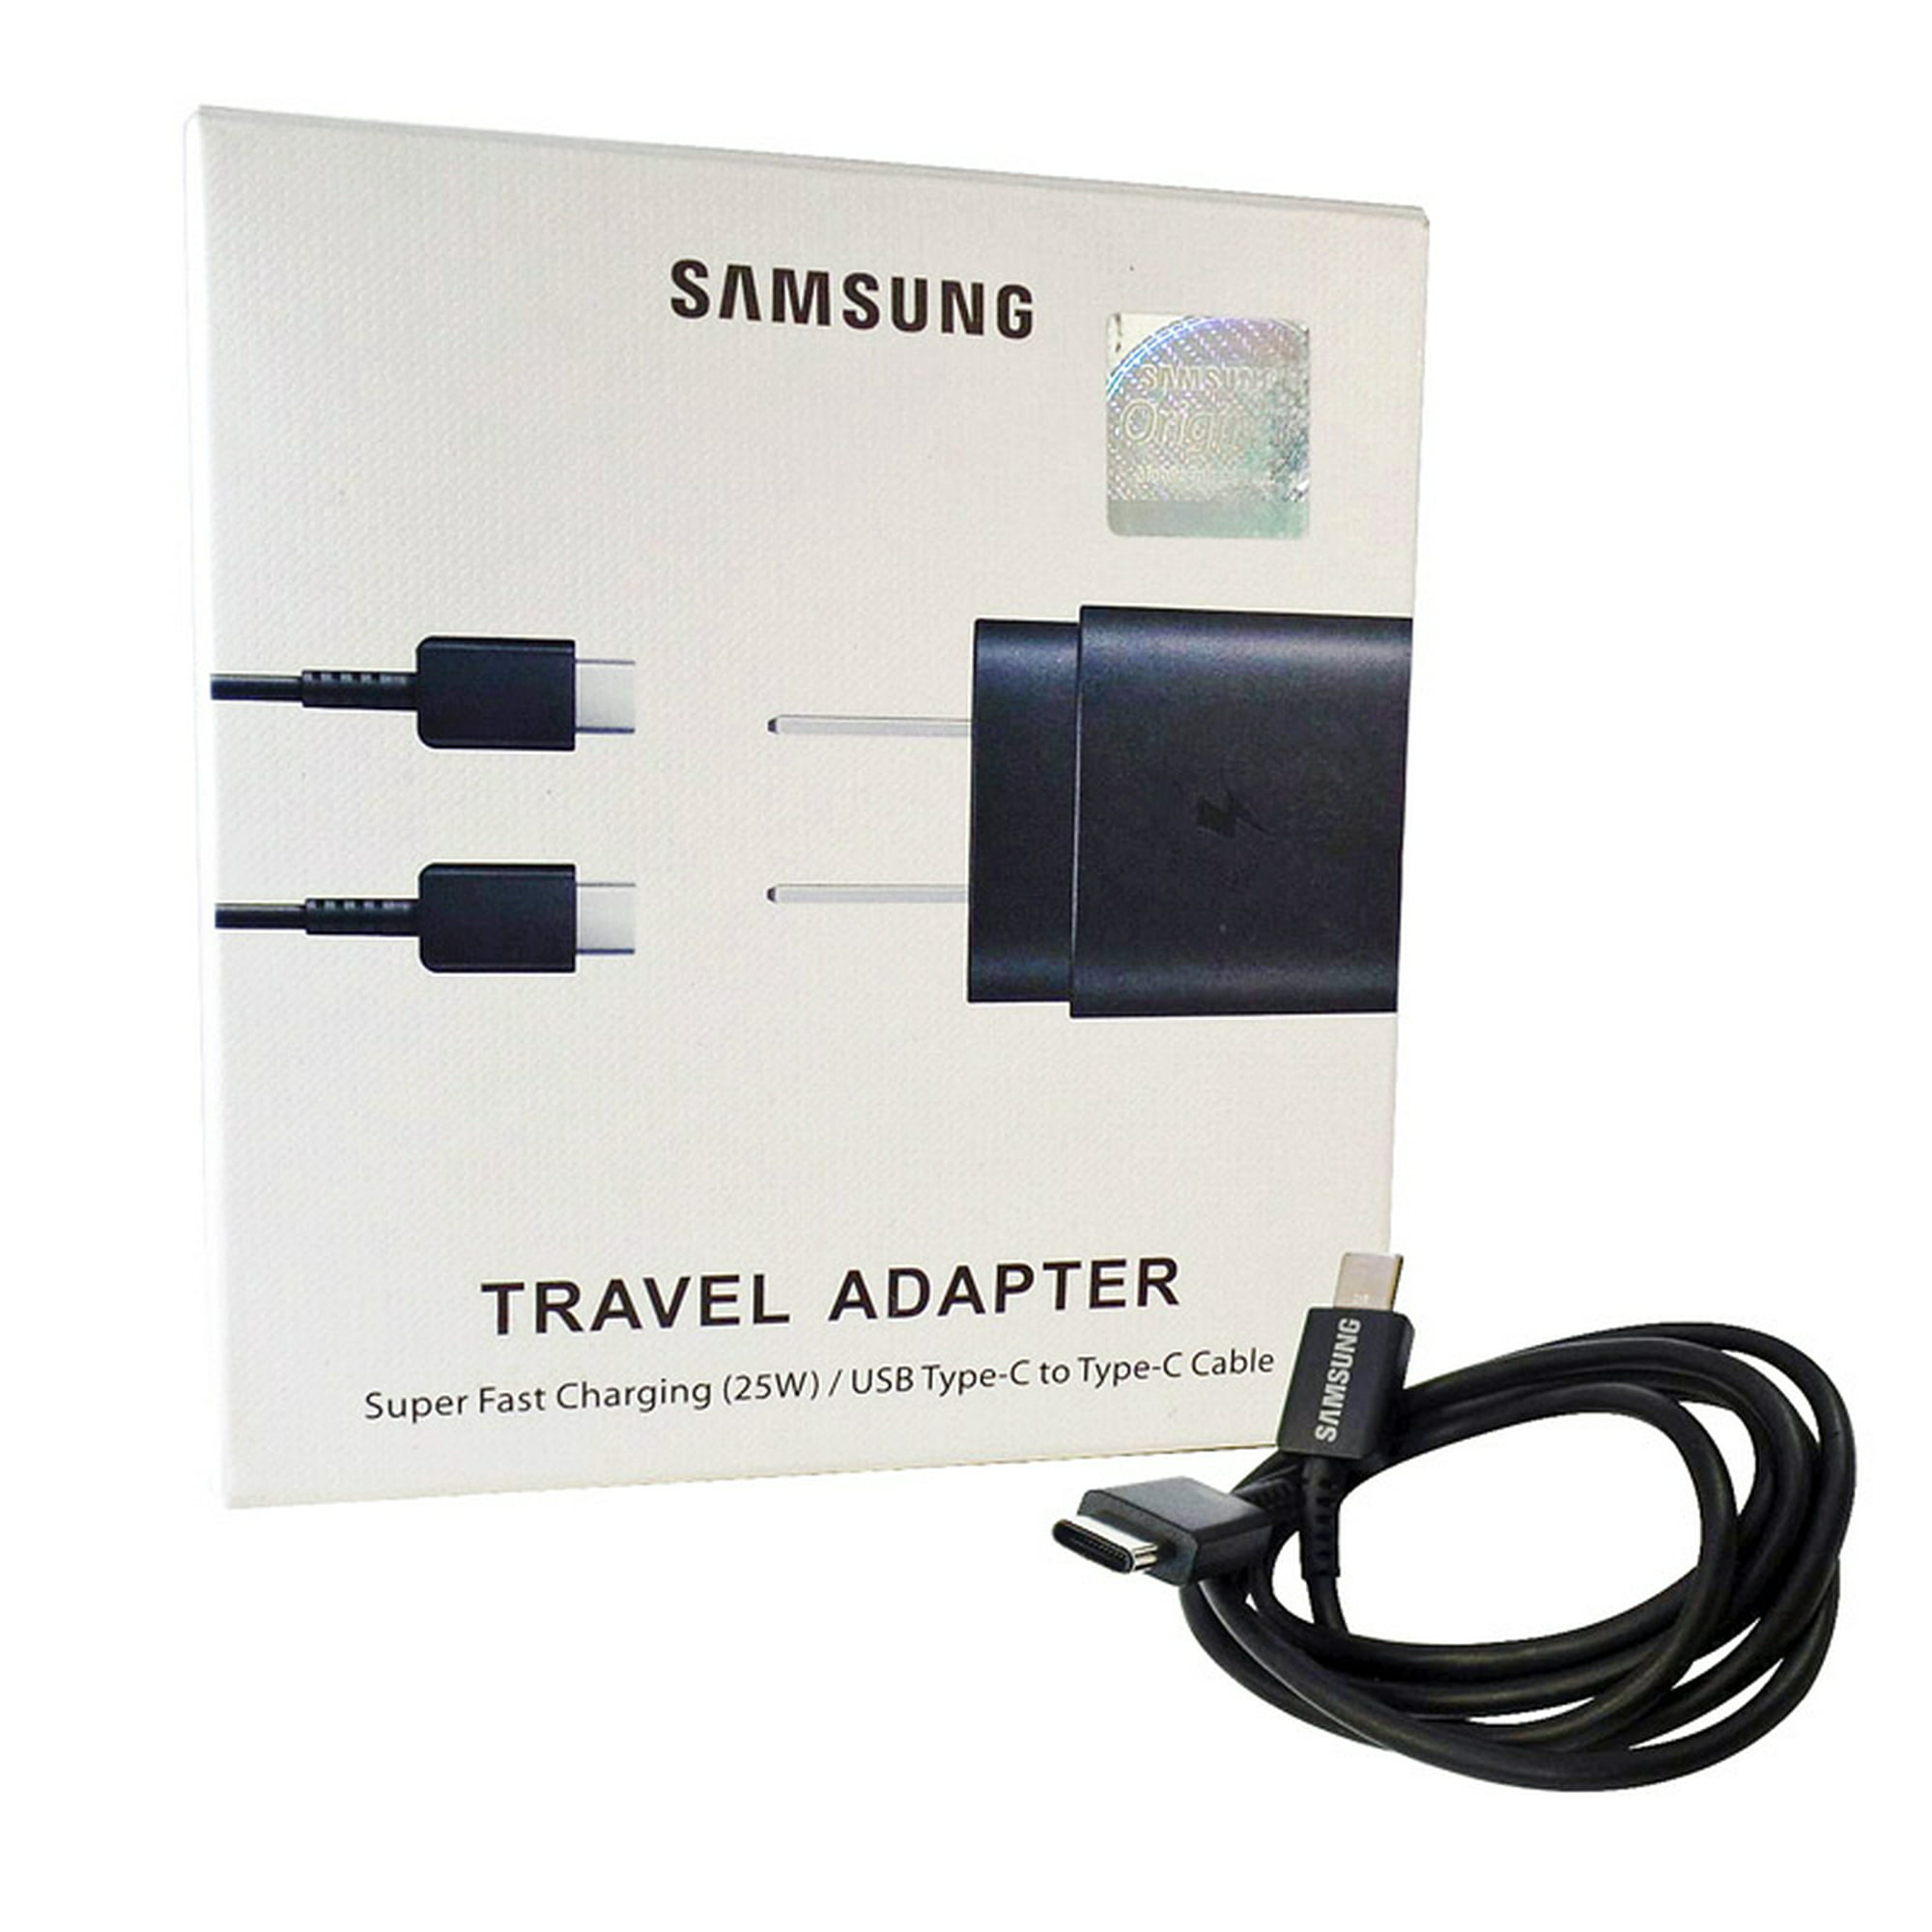 Cargador Samsung Travel Adapter de (25W) Con Cable Tipo C a Tipo C